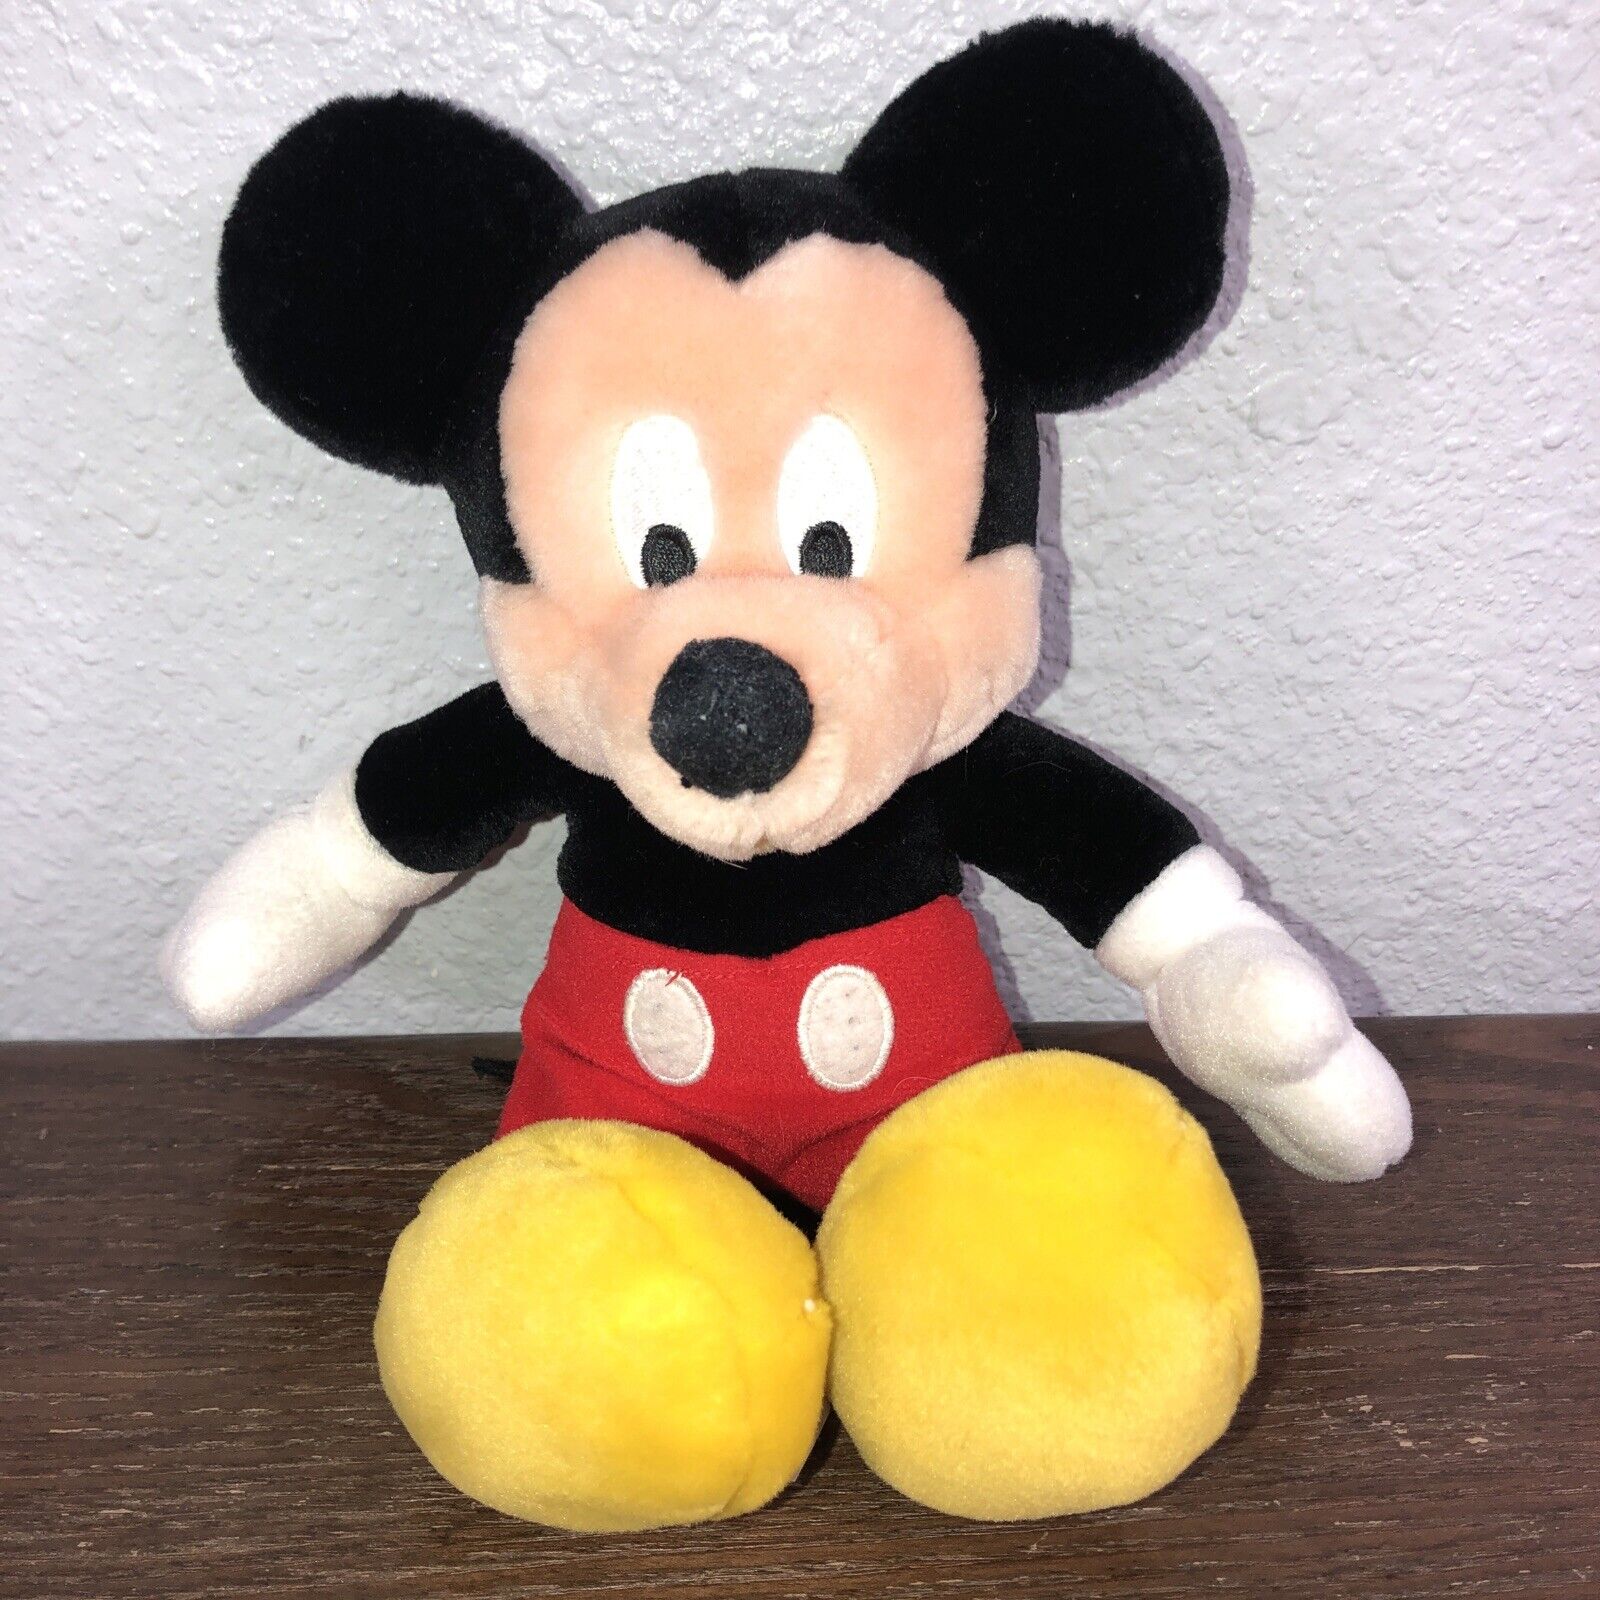 Mickey Mouse 10” Disney Parks Authentic Original Soft Plush Toy 2000